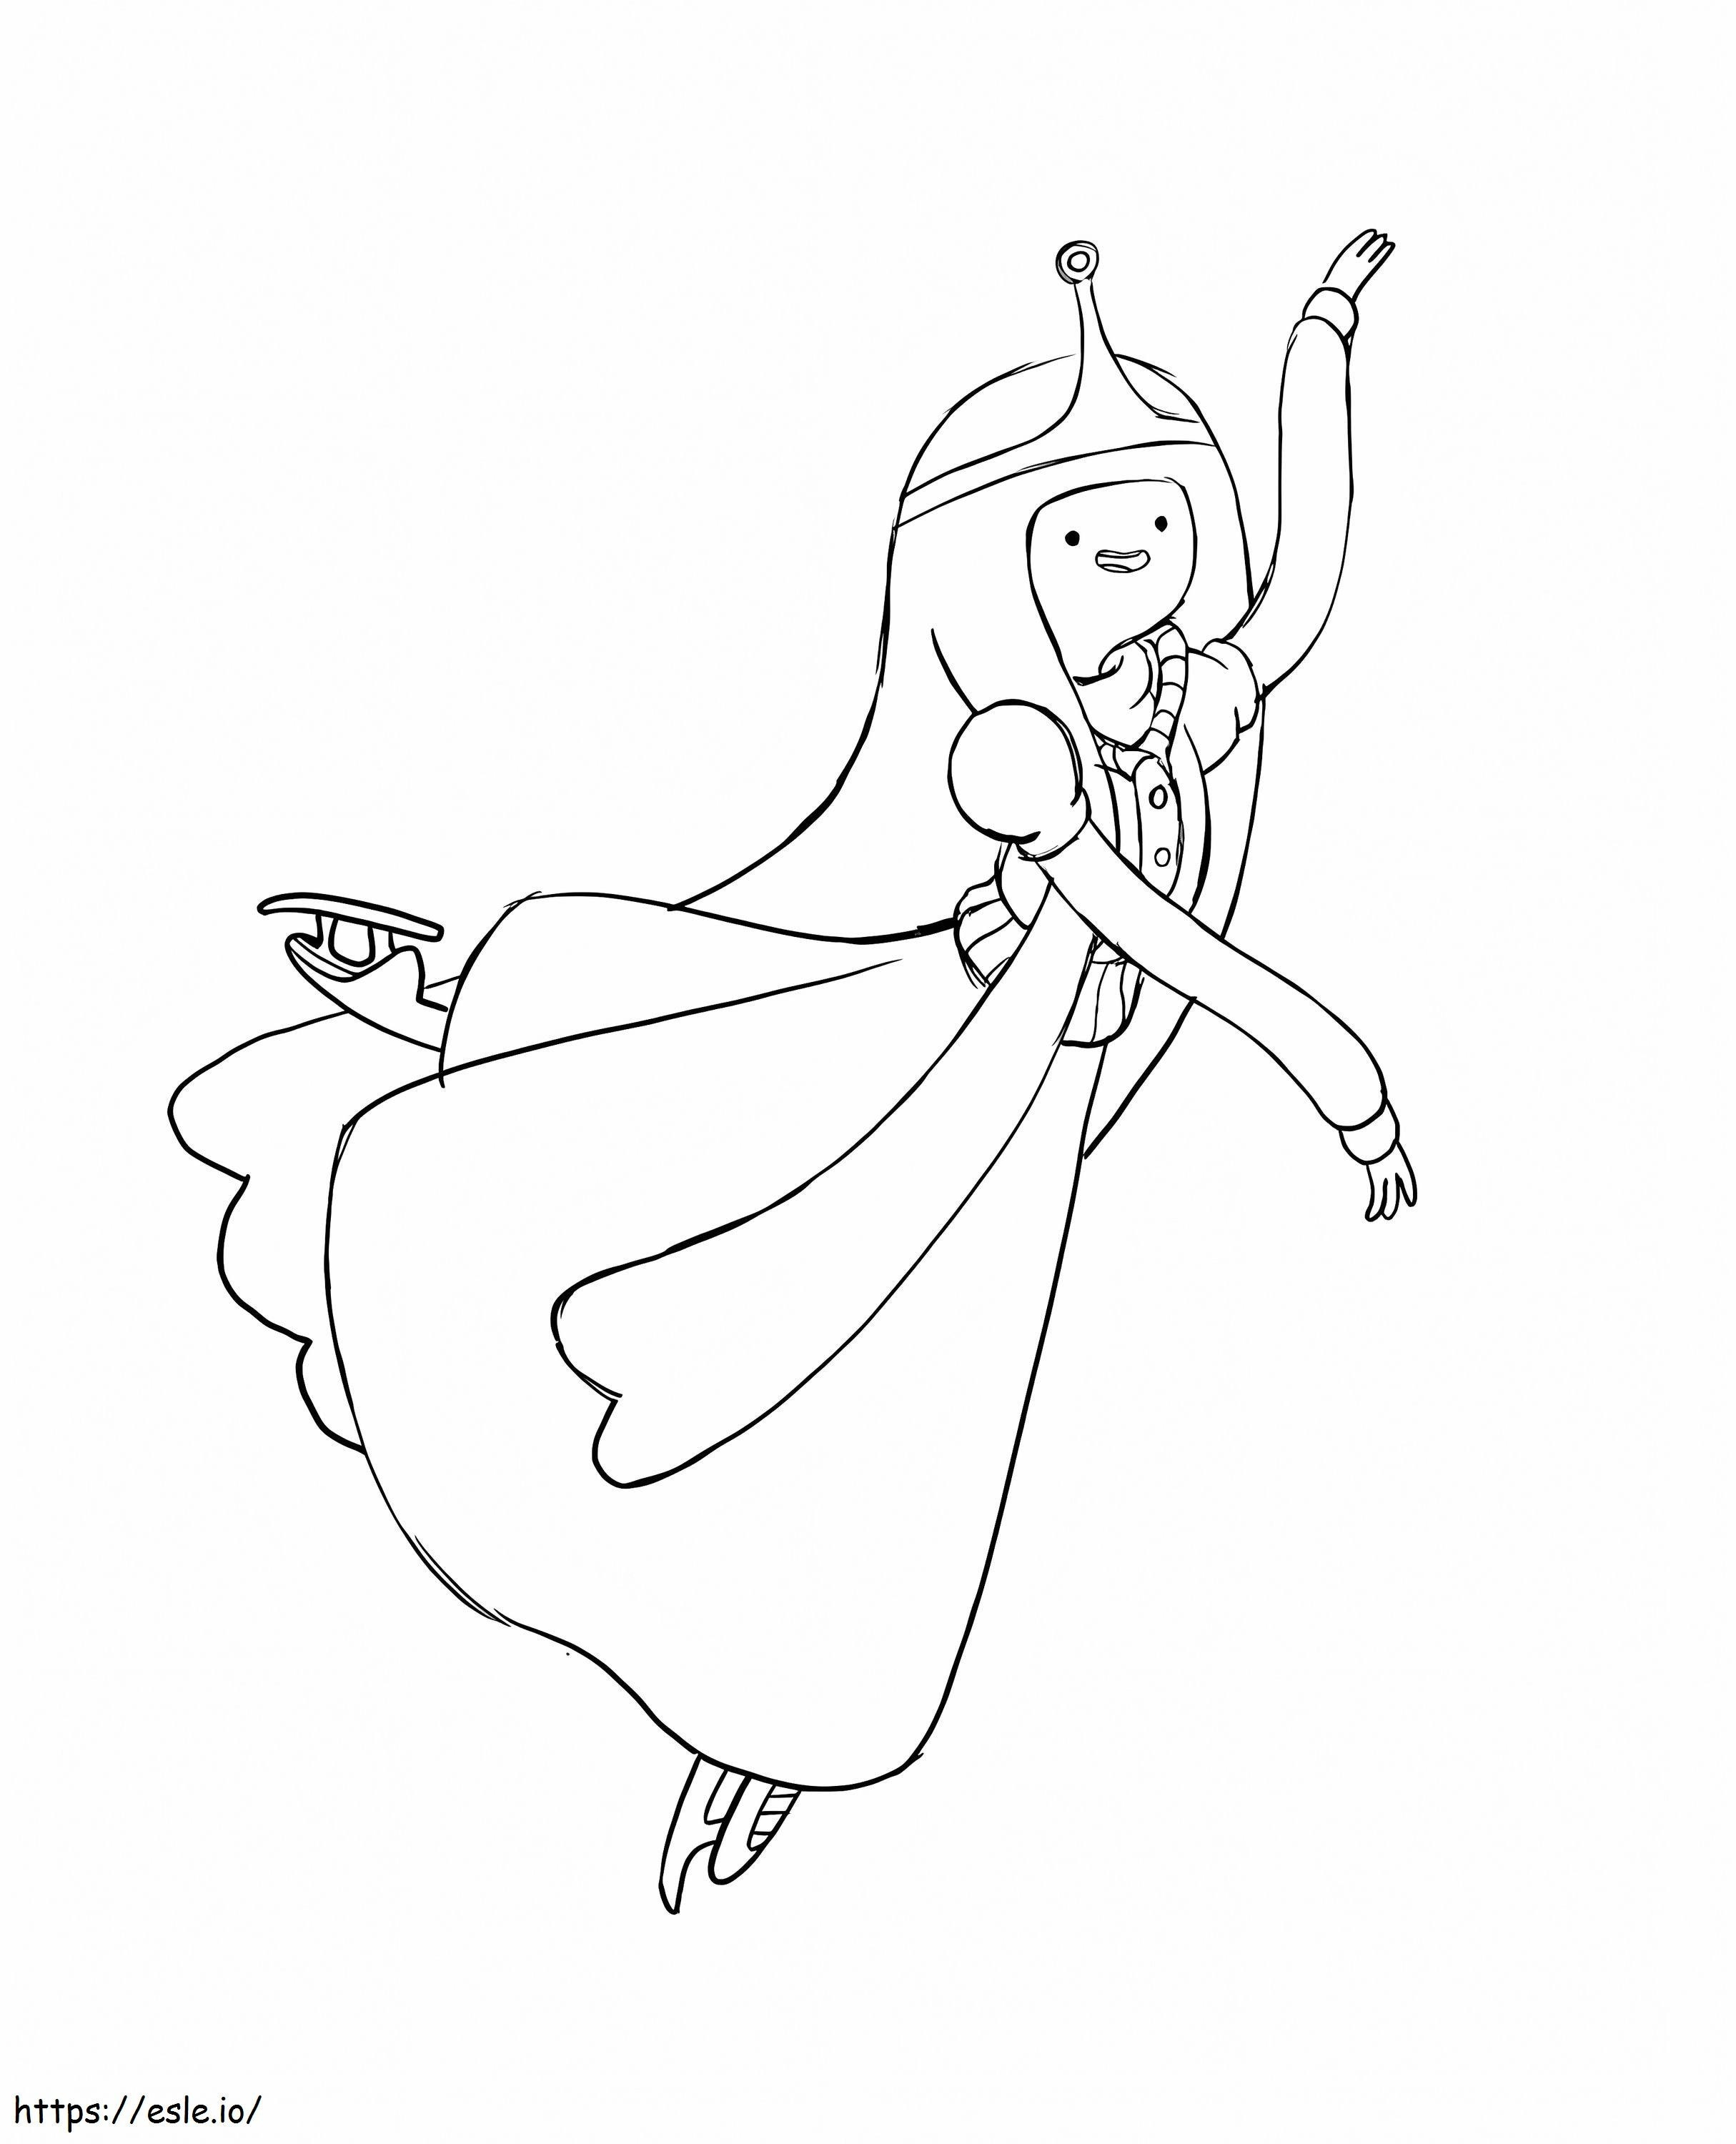 Princesa Jujuba Dançando para colorir